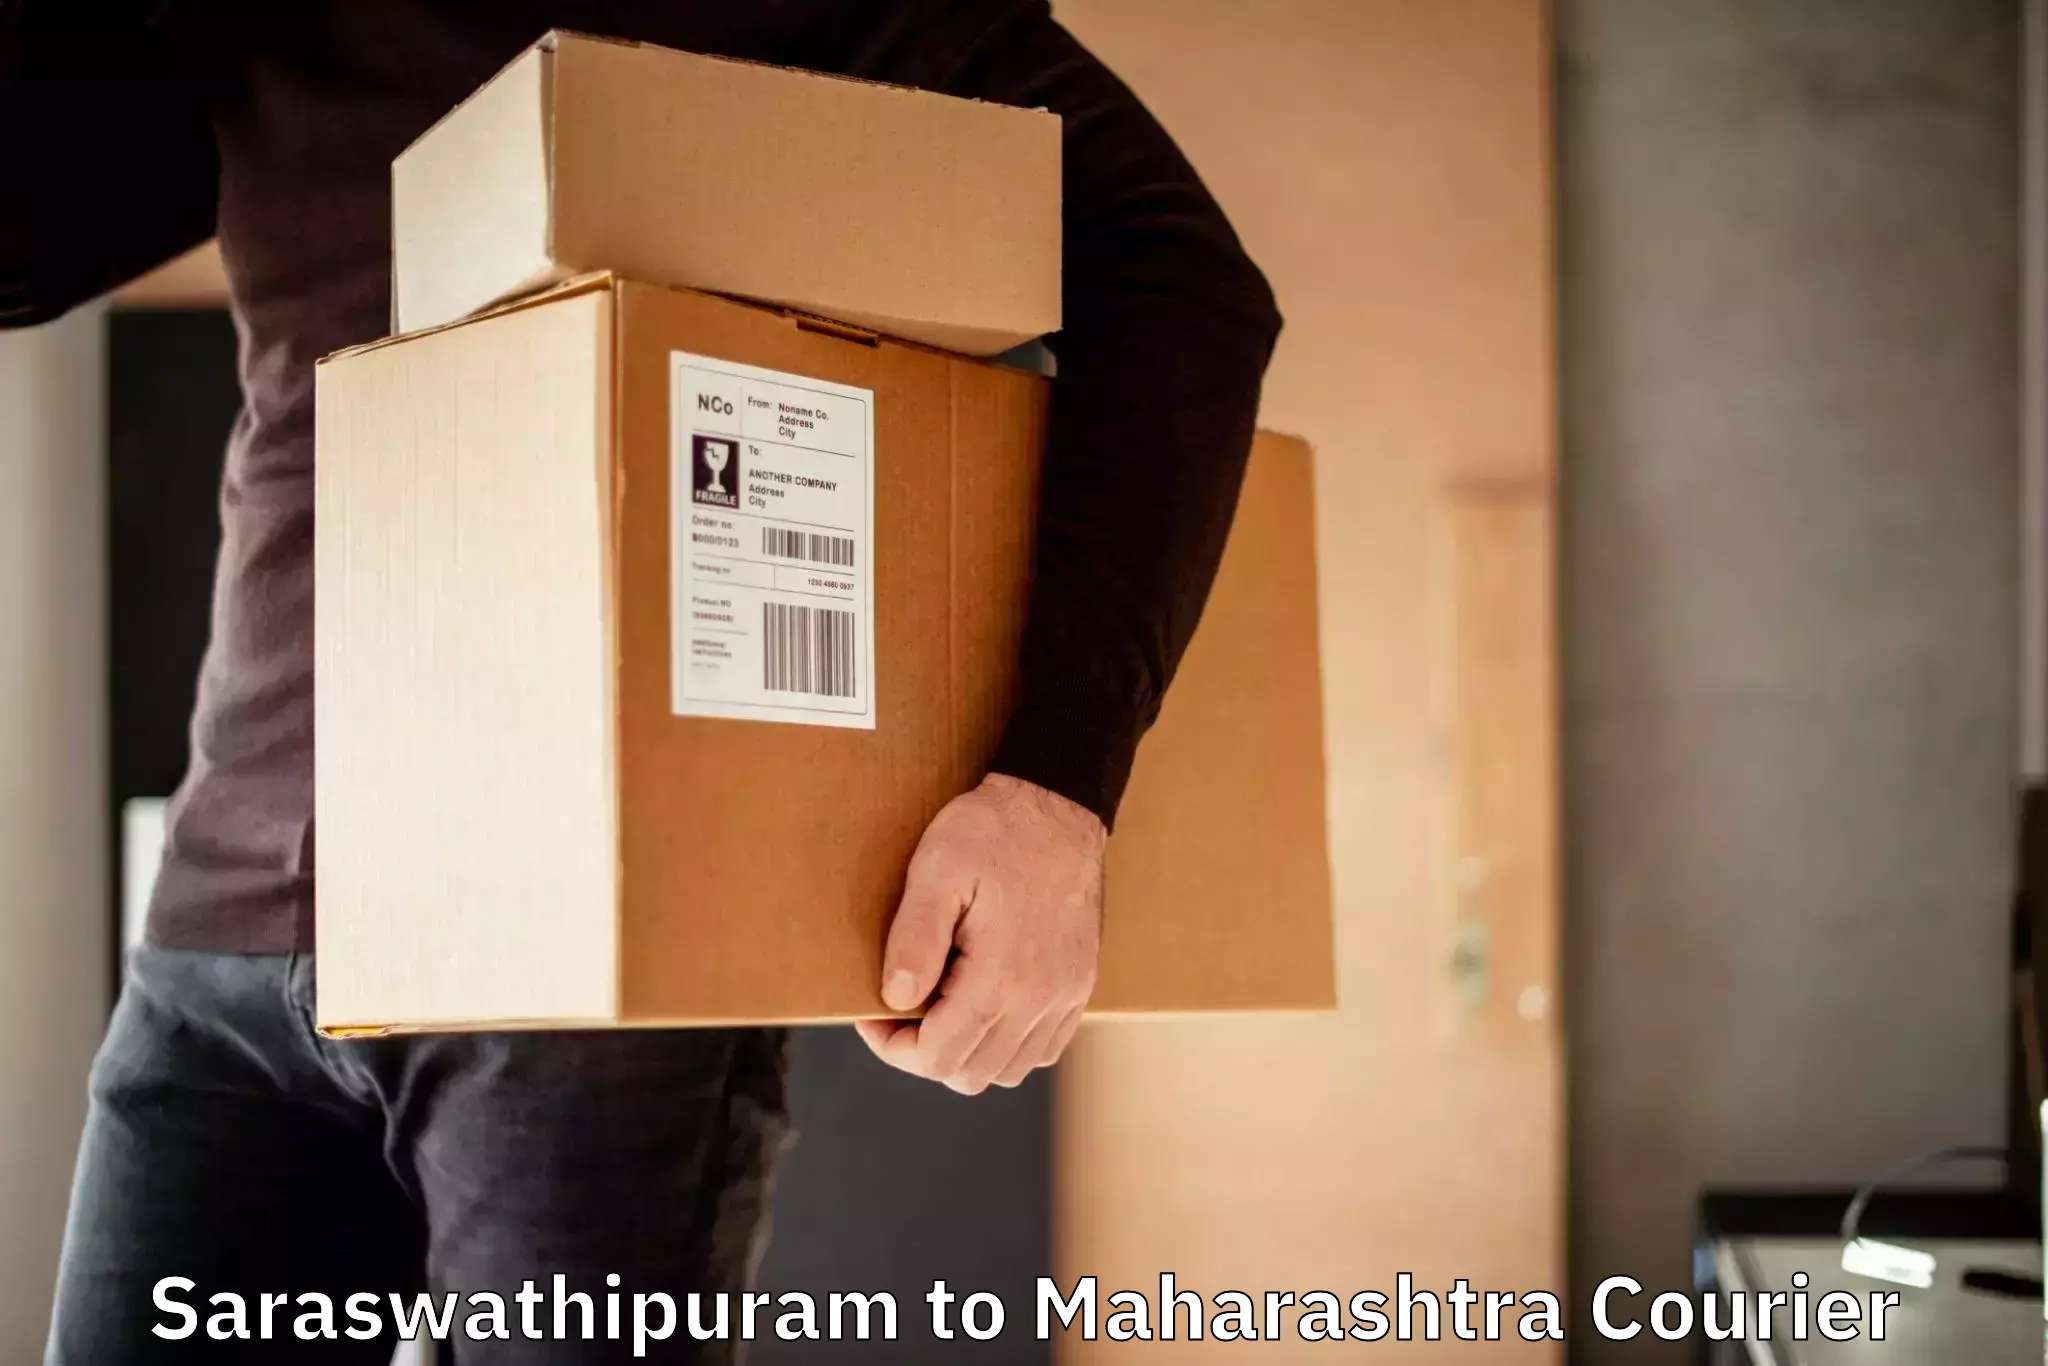 Courier service partnerships Saraswathipuram to Sangamner